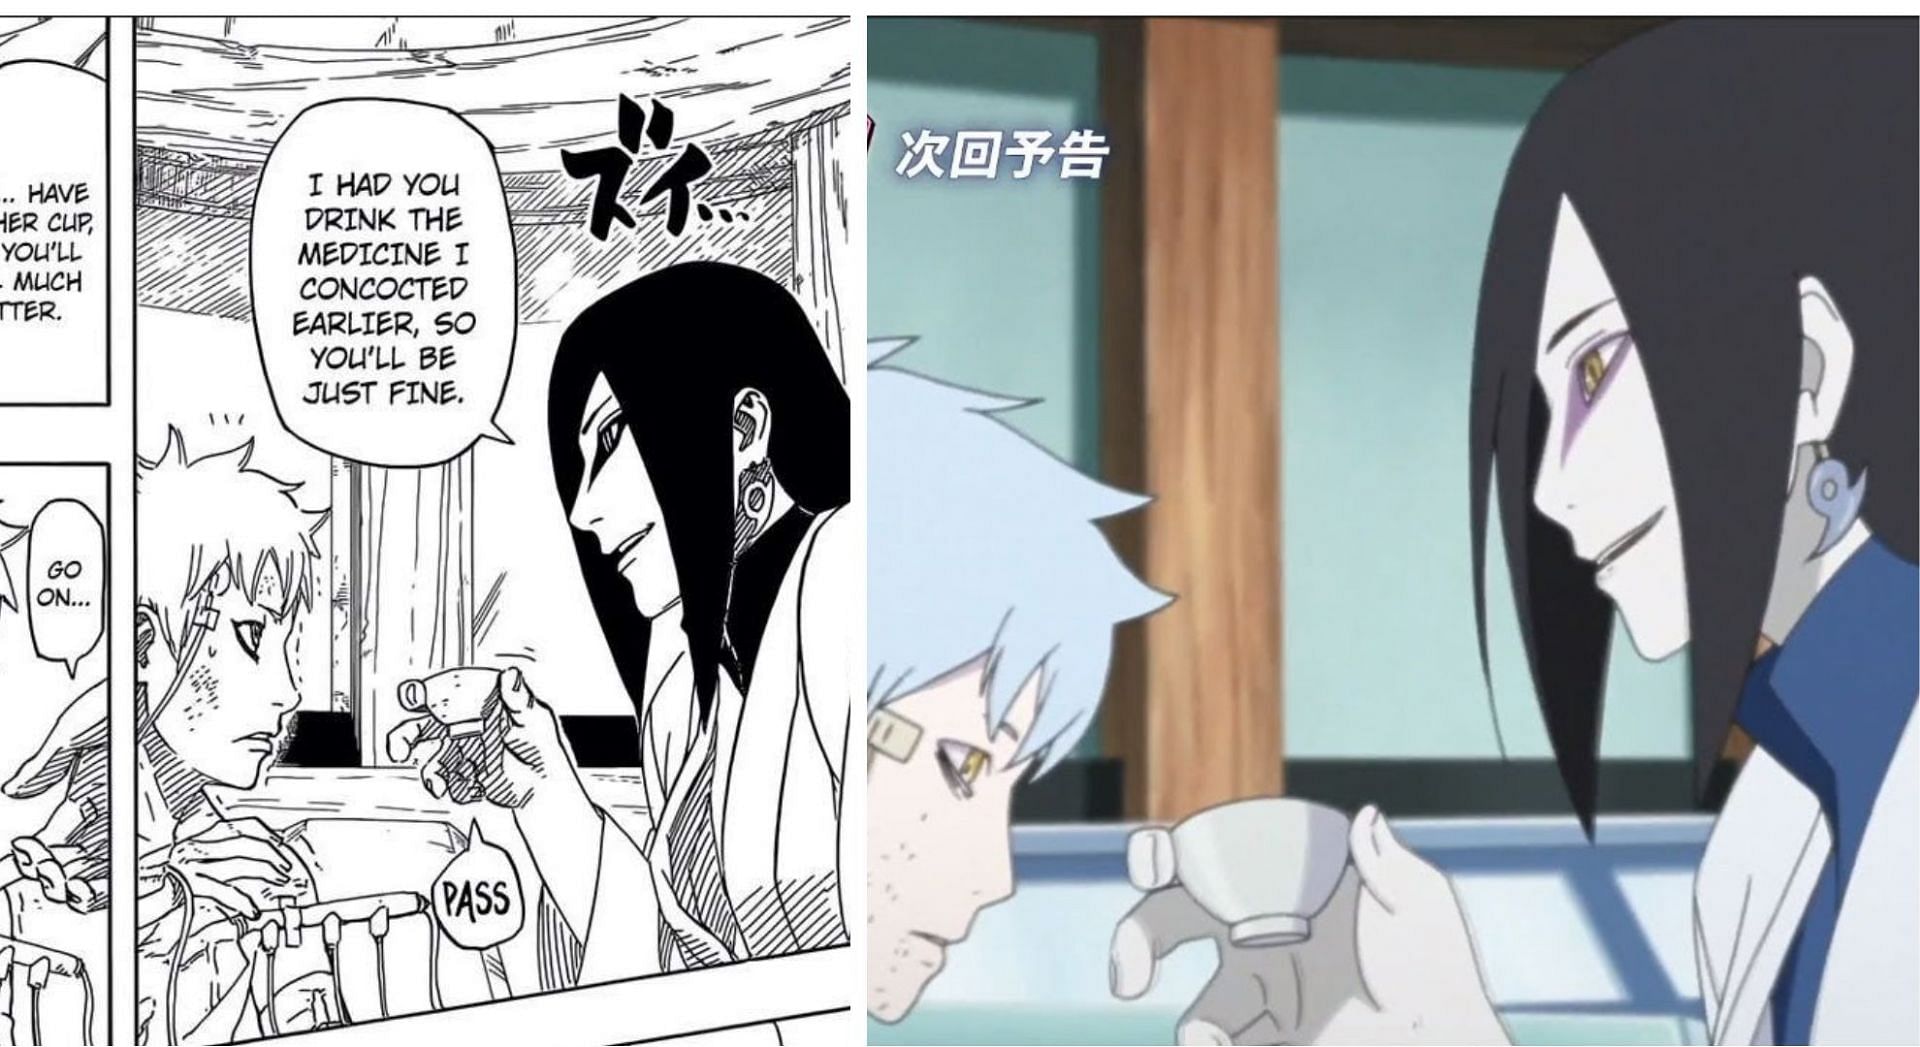 Orochimaru giving Mituski medicine in the anime and manga. (Image via Sportskeeda)